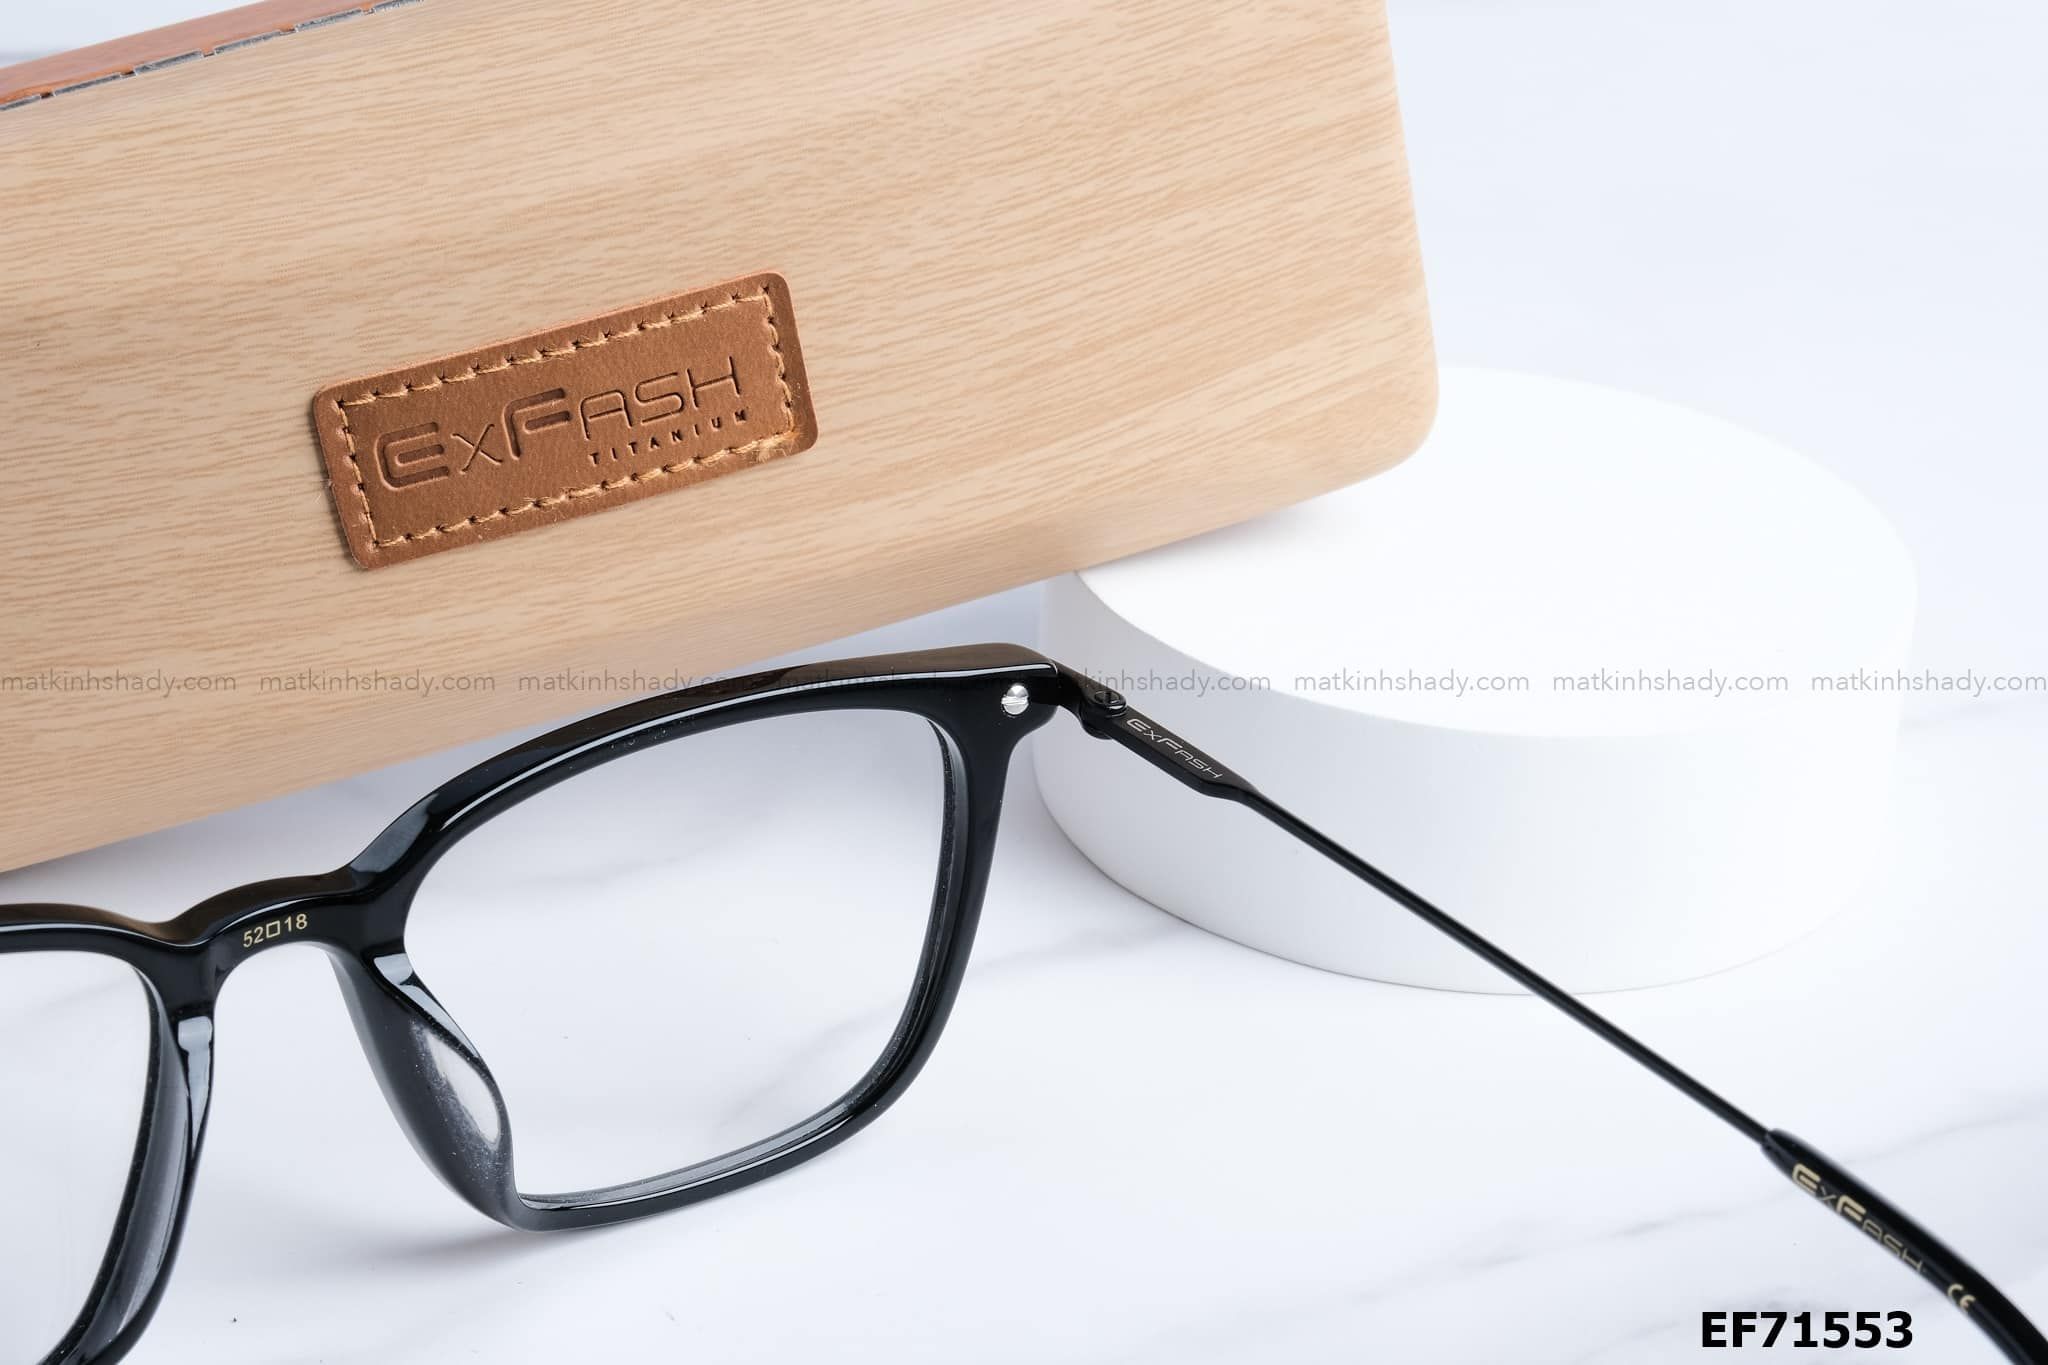  Exfash Eyewear - Glasses - EF71553 